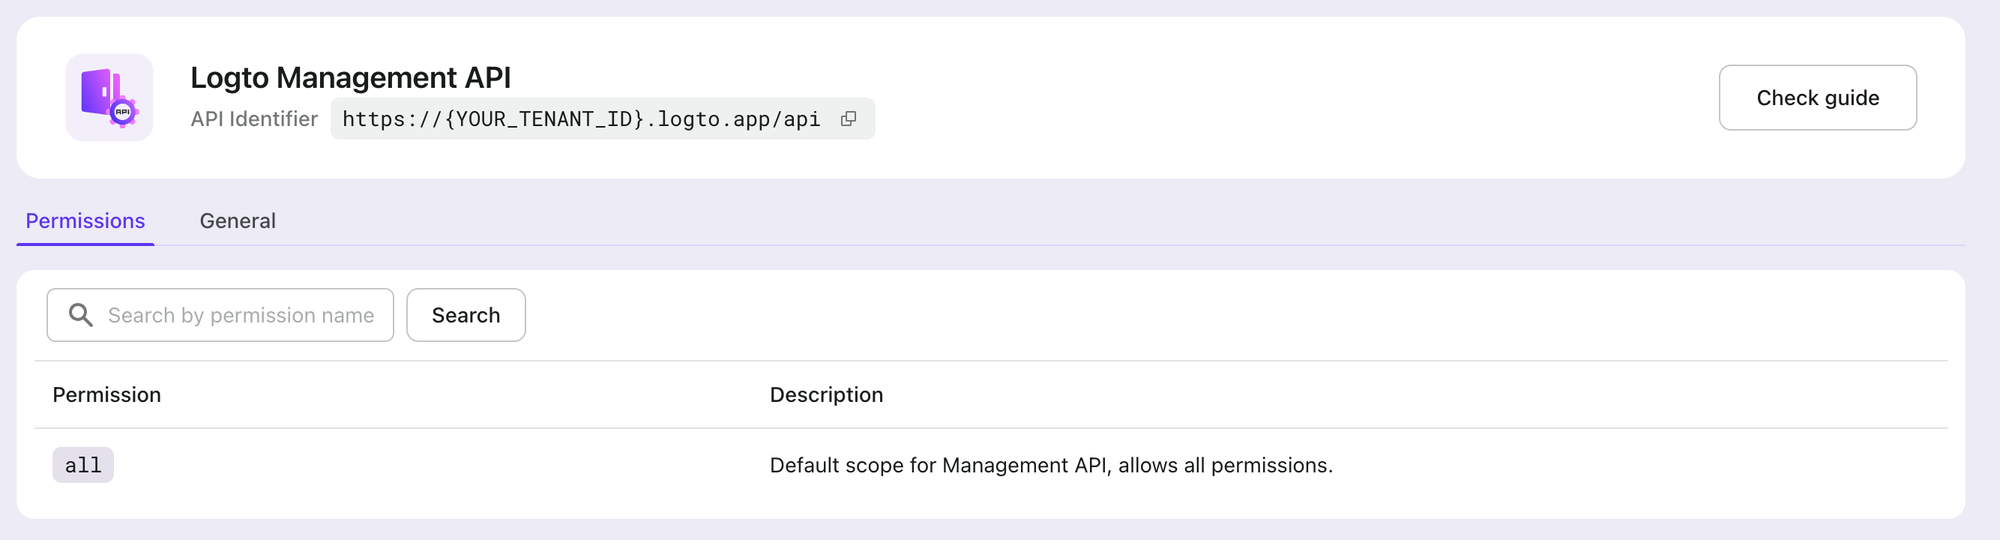 Logto Management API Details